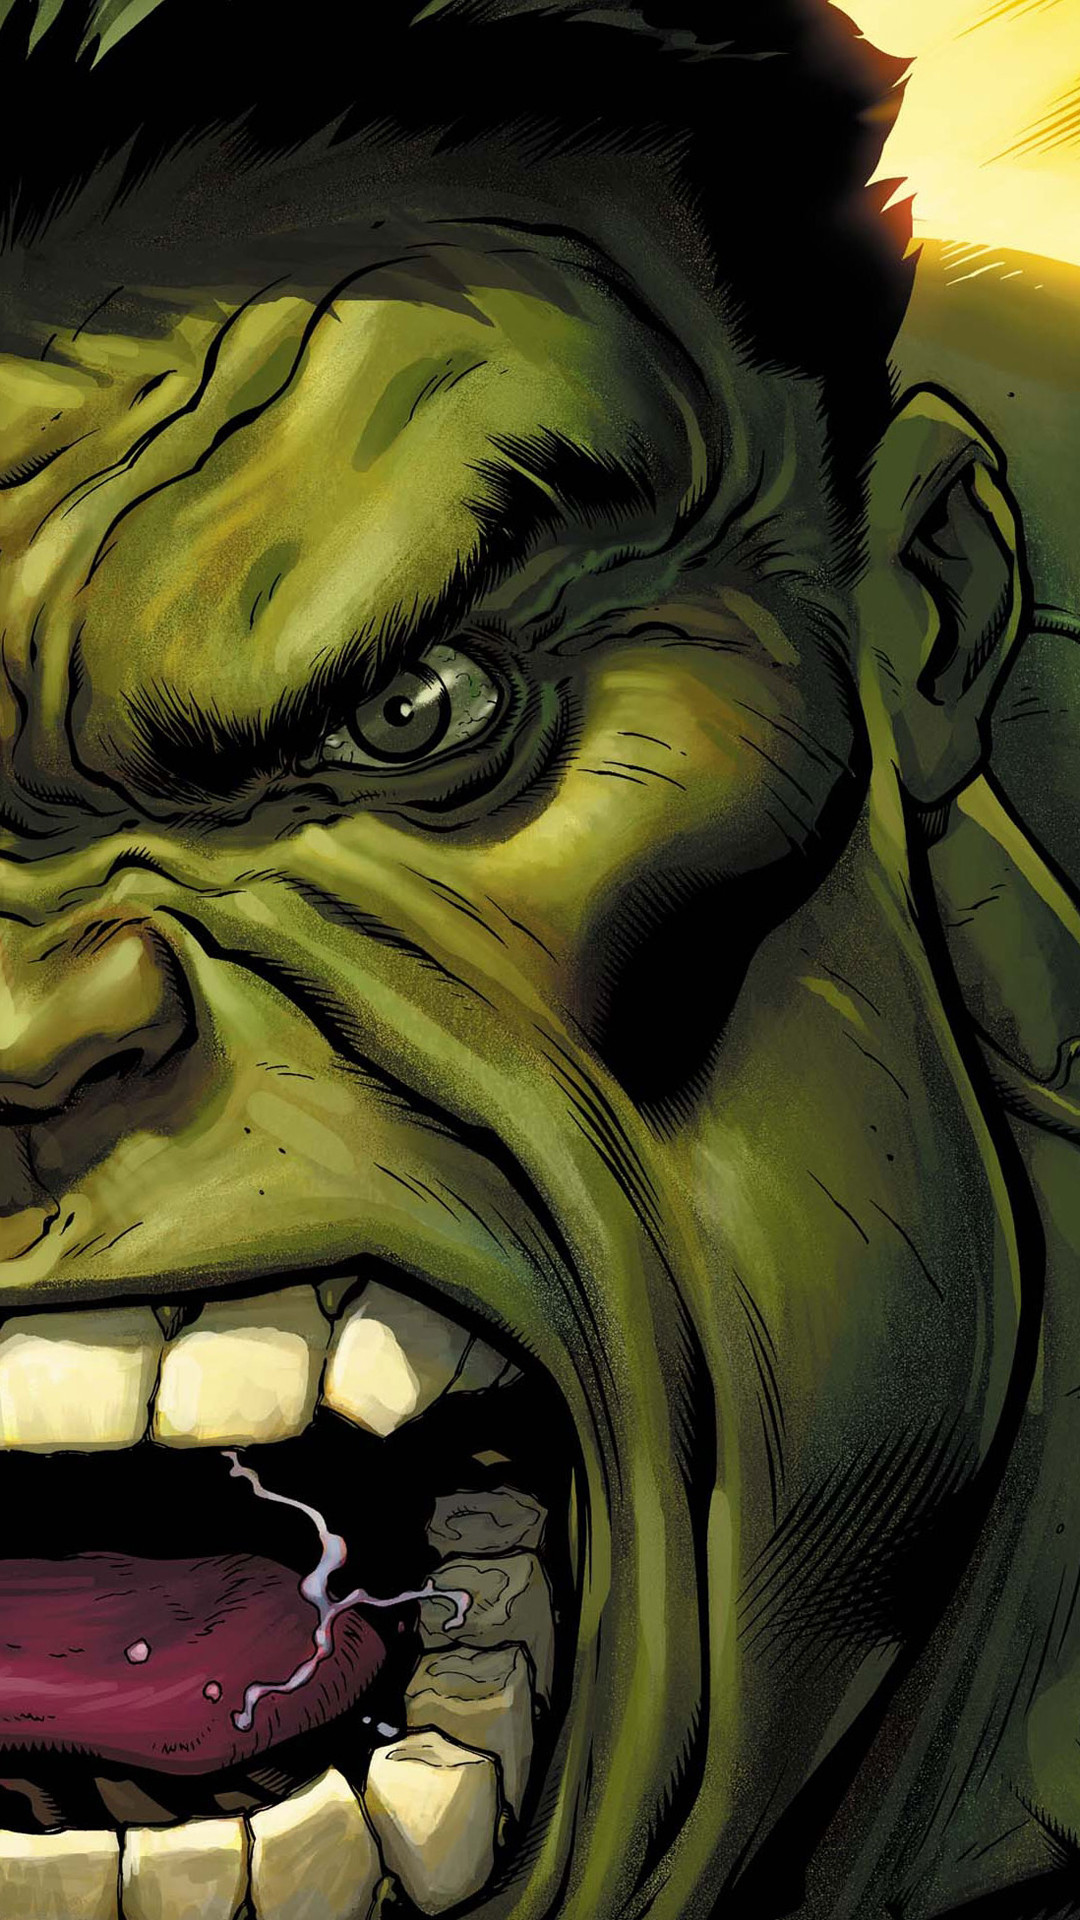 1080x1920 The Hulk Screaming Illustration iPhone 6 Plus HD Wallpaper ...